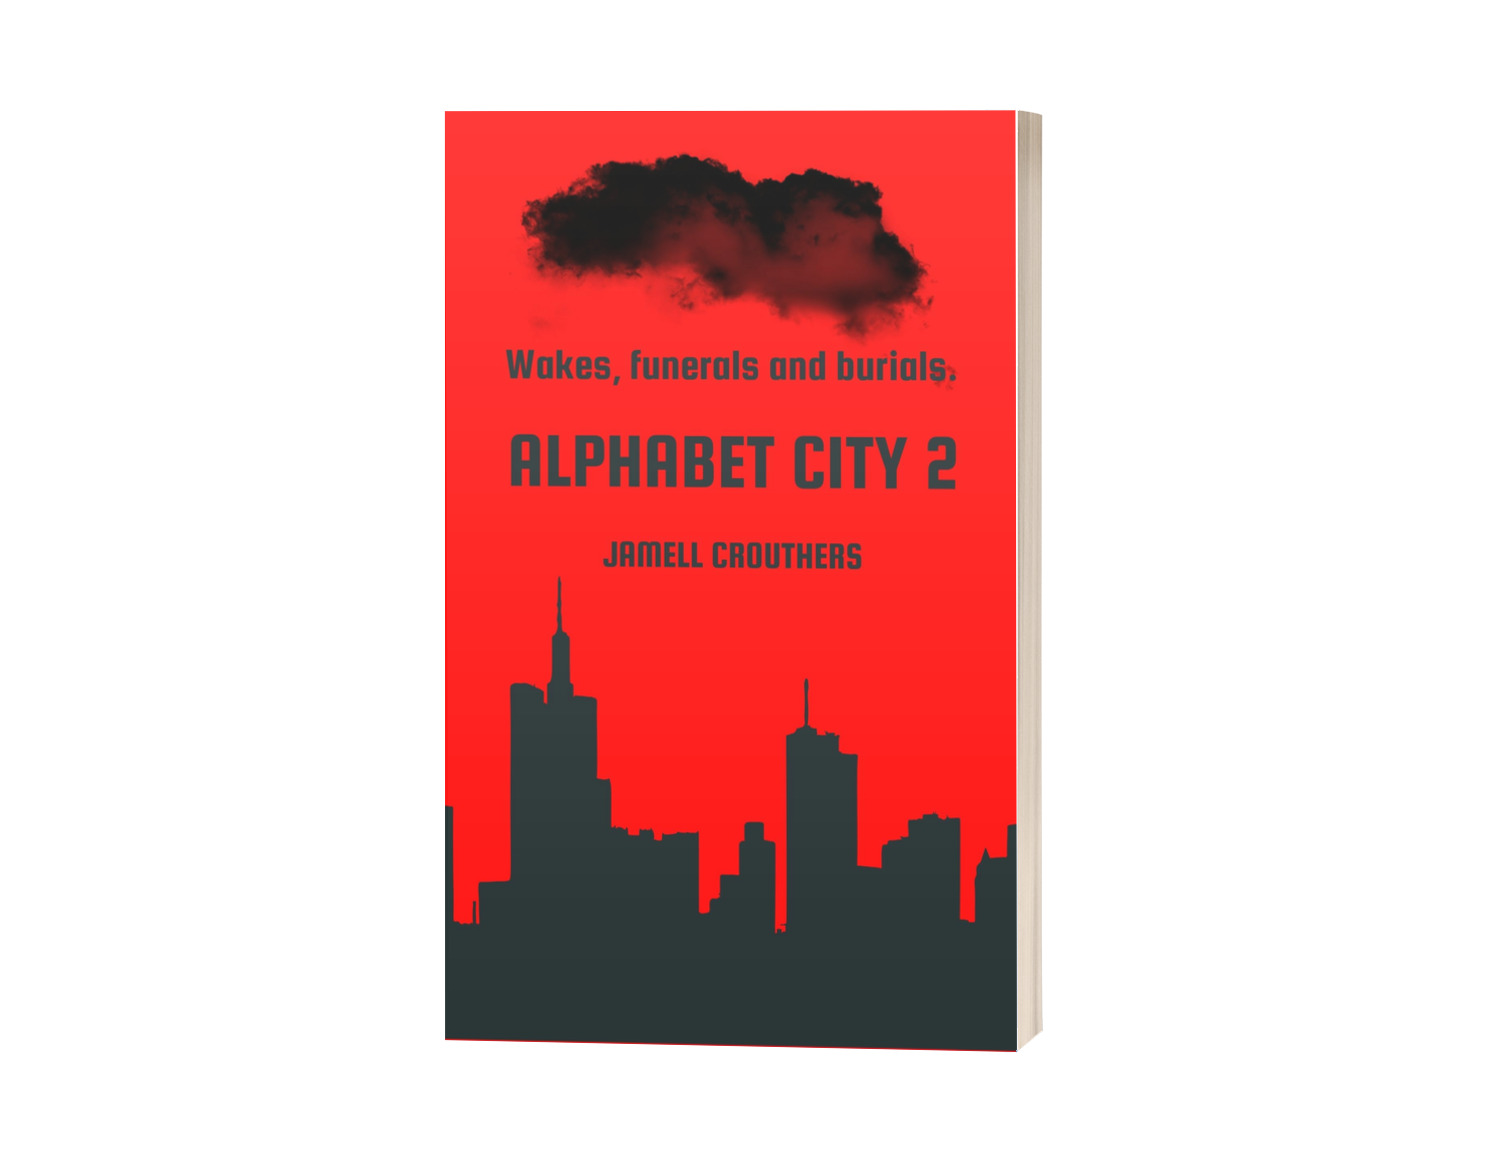 Writing 'Alphabet City 2'